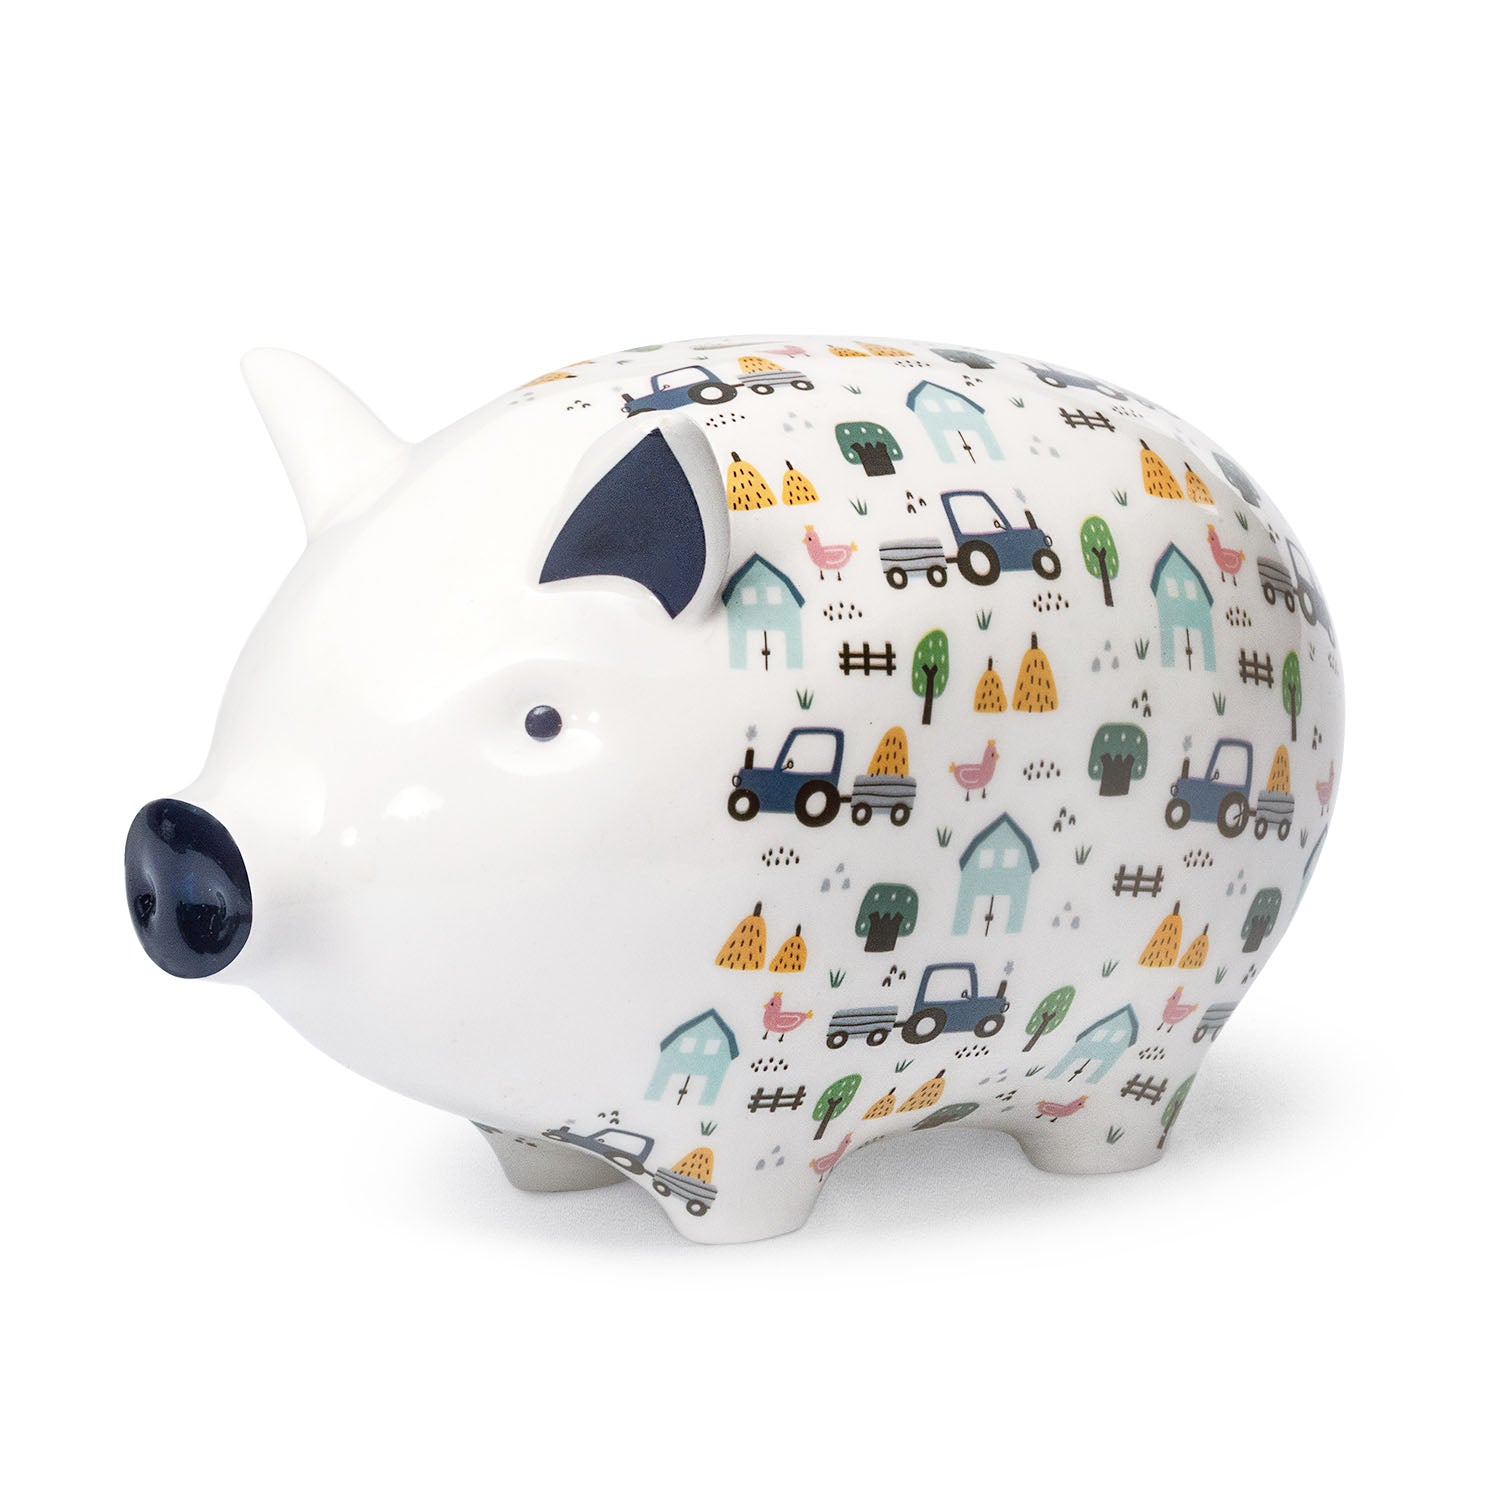 Tilly Pig - The Farmyard Piggy Bank